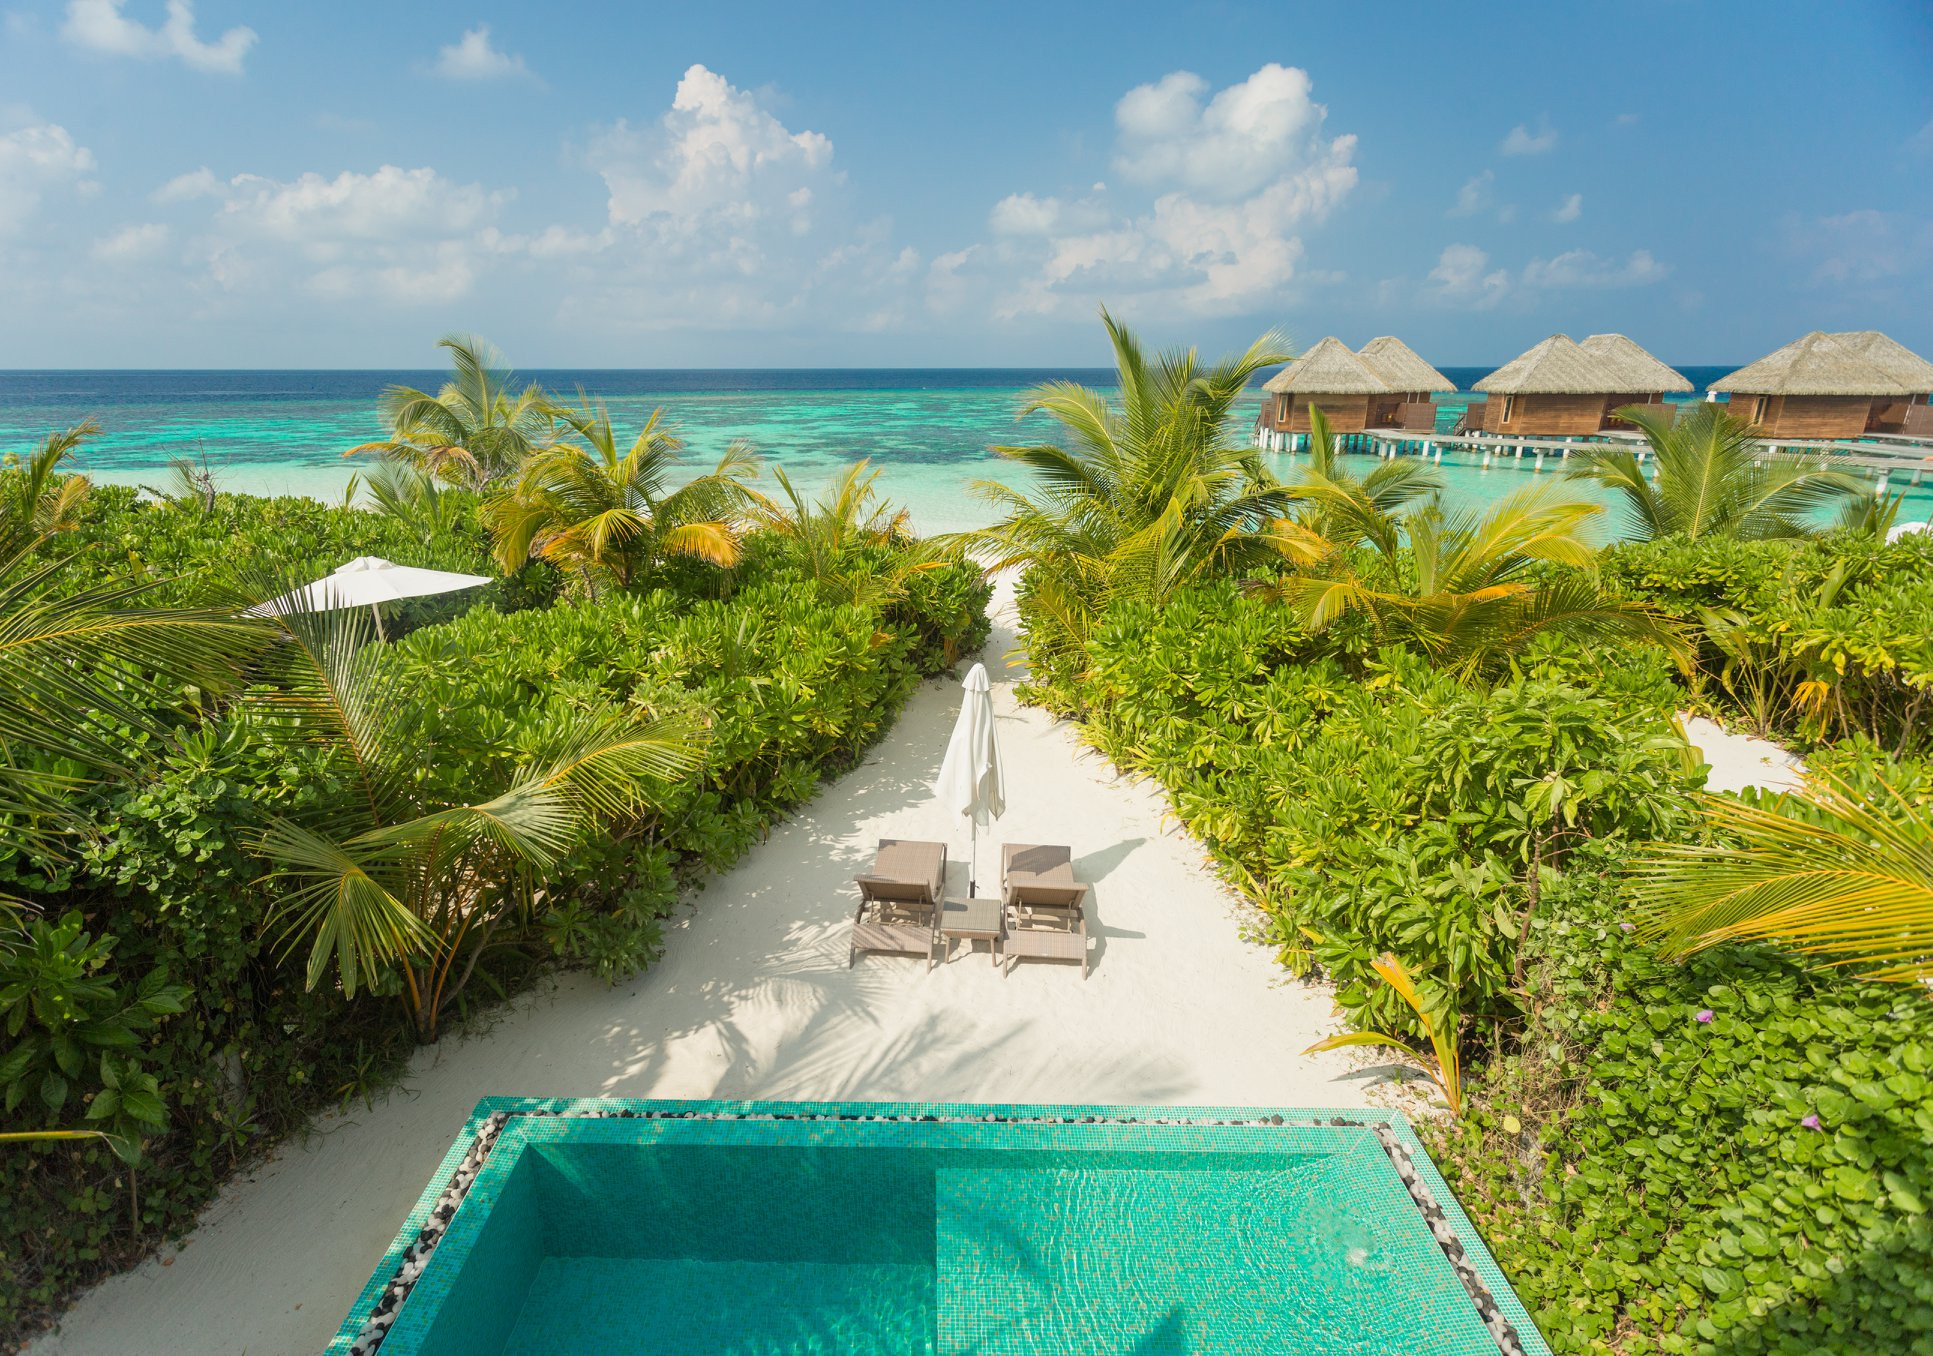 Maldives is Kuoni’s Most Popular Long-haul Destination for 2021 Honeymoons